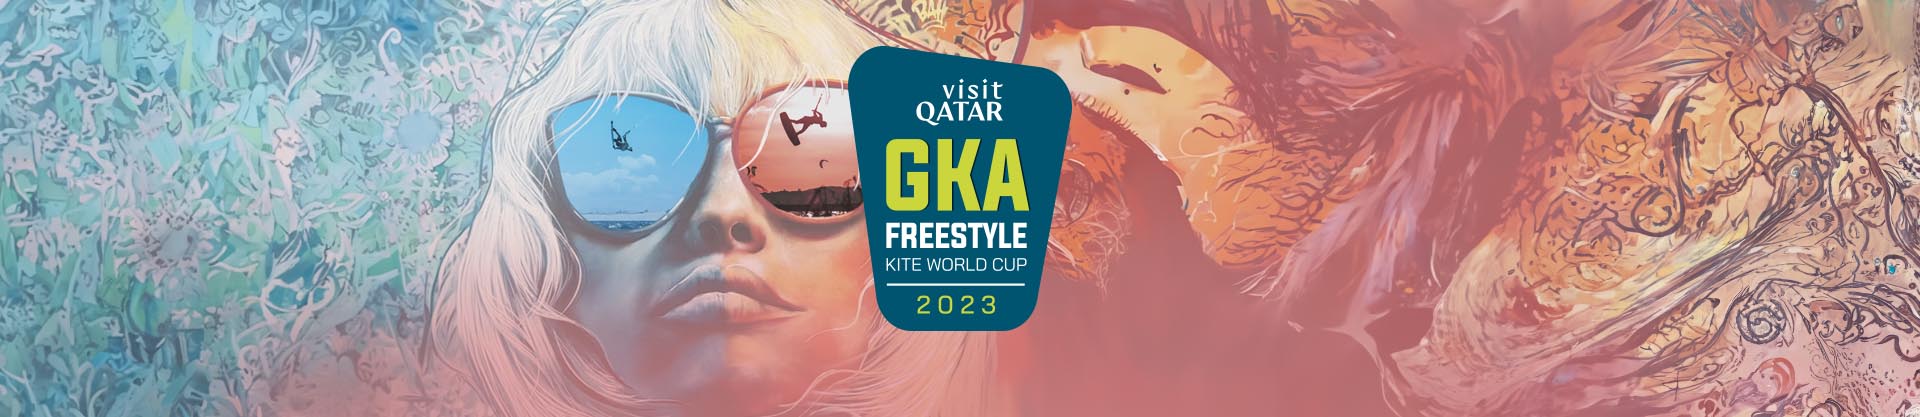 Image for Visit Qatar GKA Freestyle Kite World Cup Finals Qatar 2023